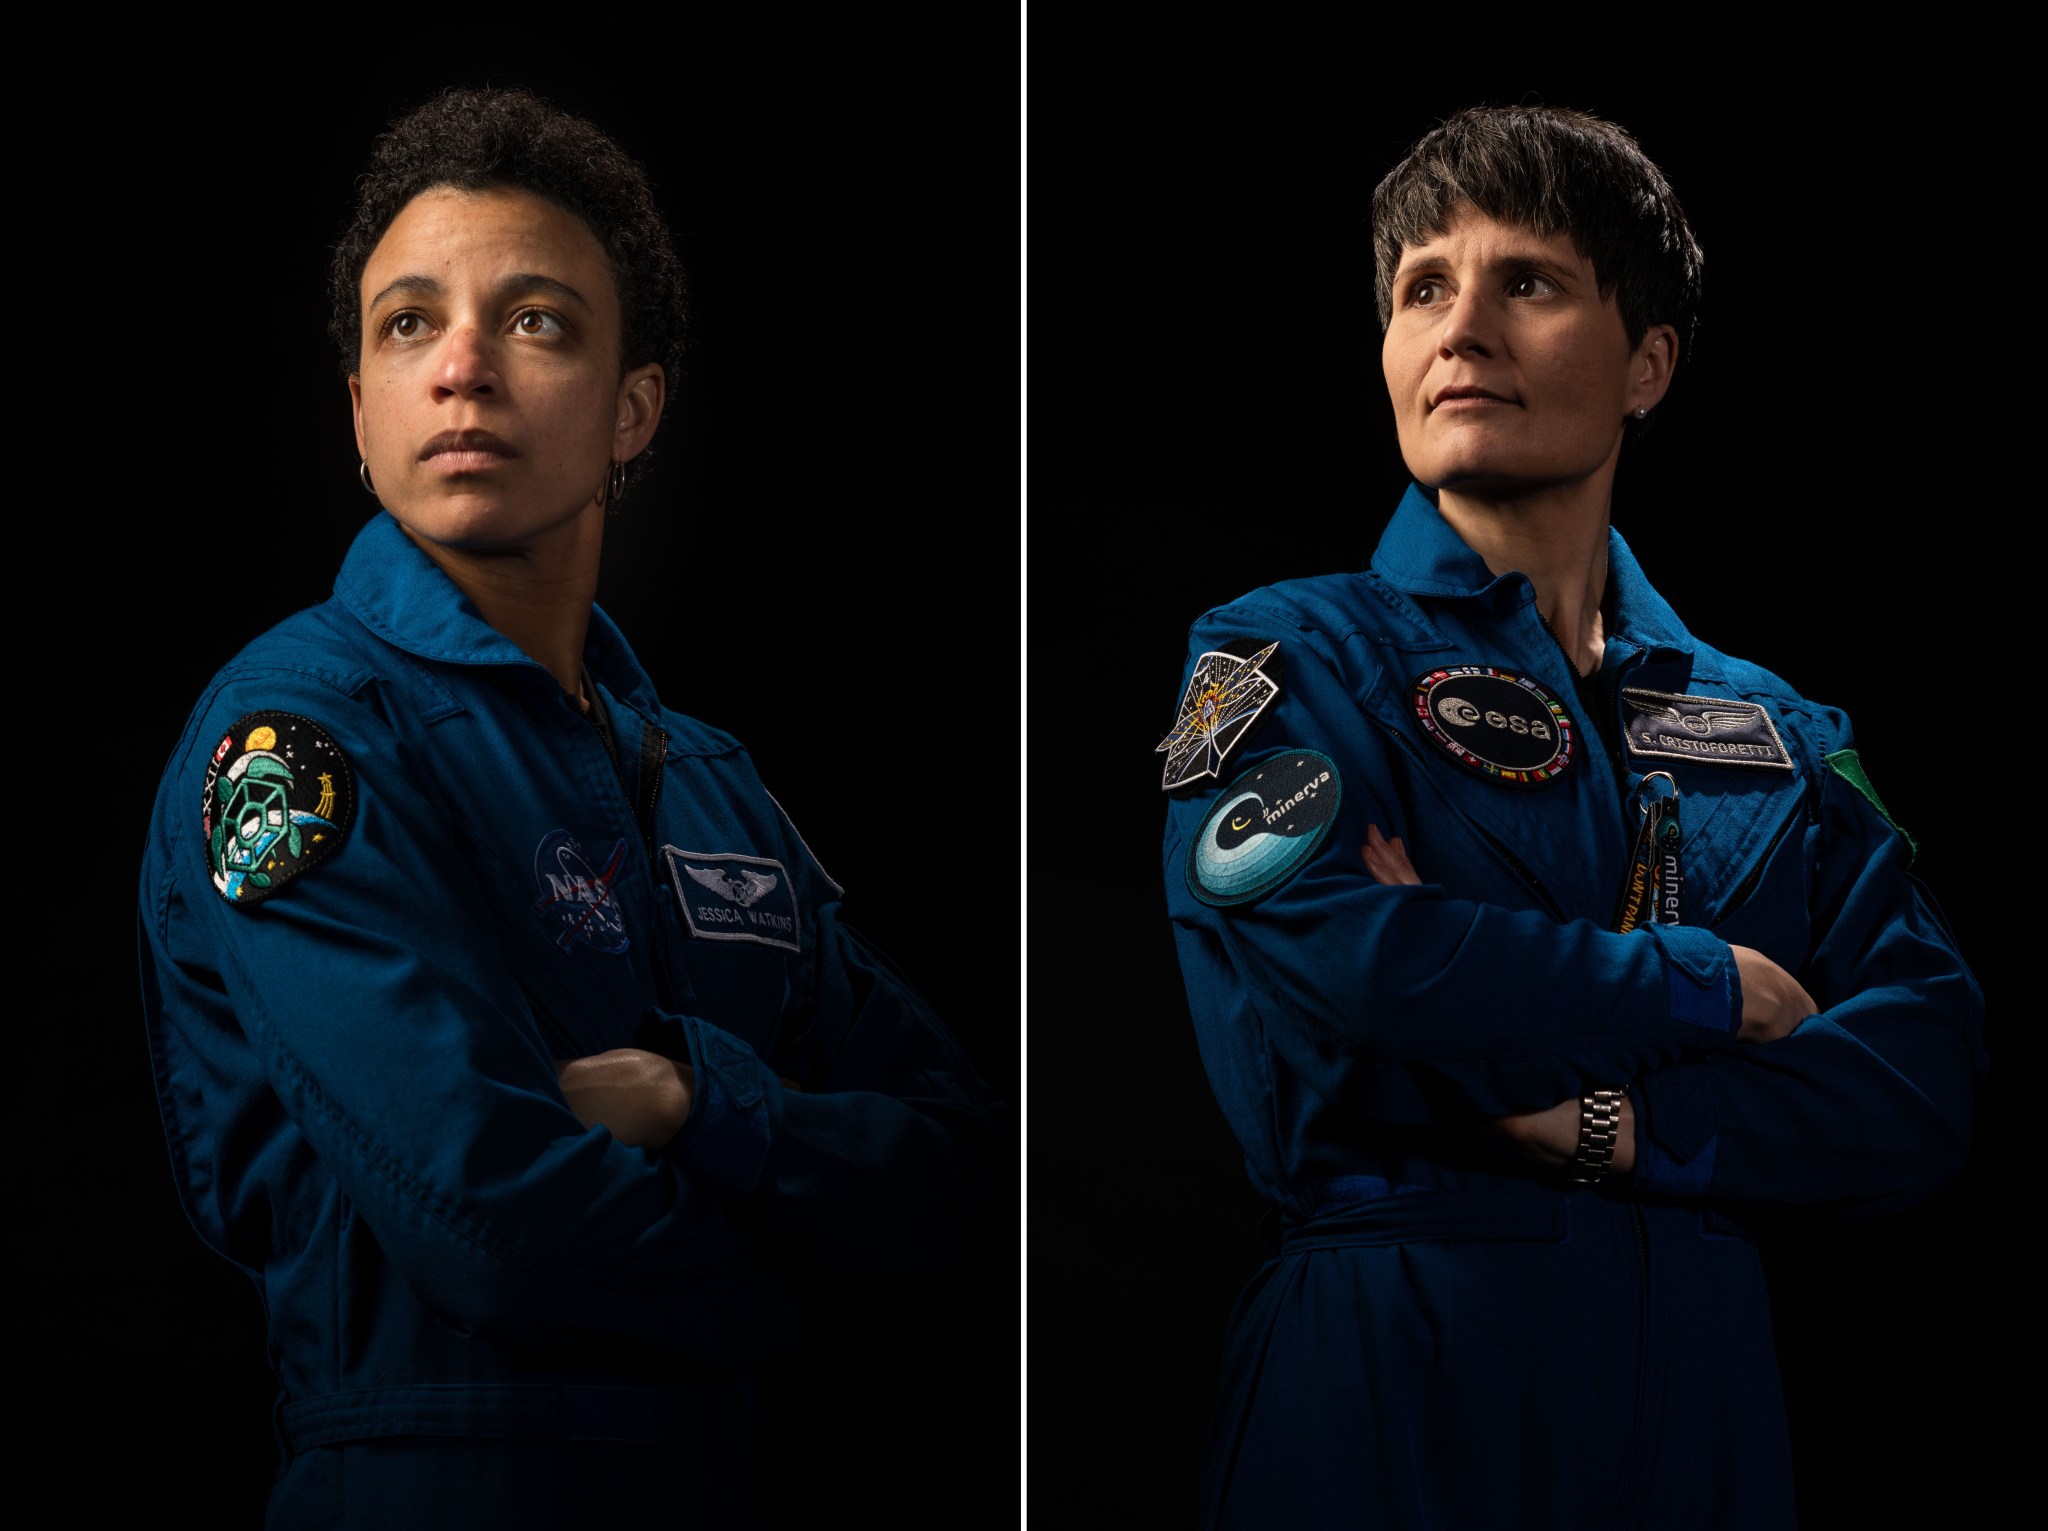 NASA astronaut Jessica Watkins, left, and ESA (European Space Agency) astronaut Samantha Cristoforetti.